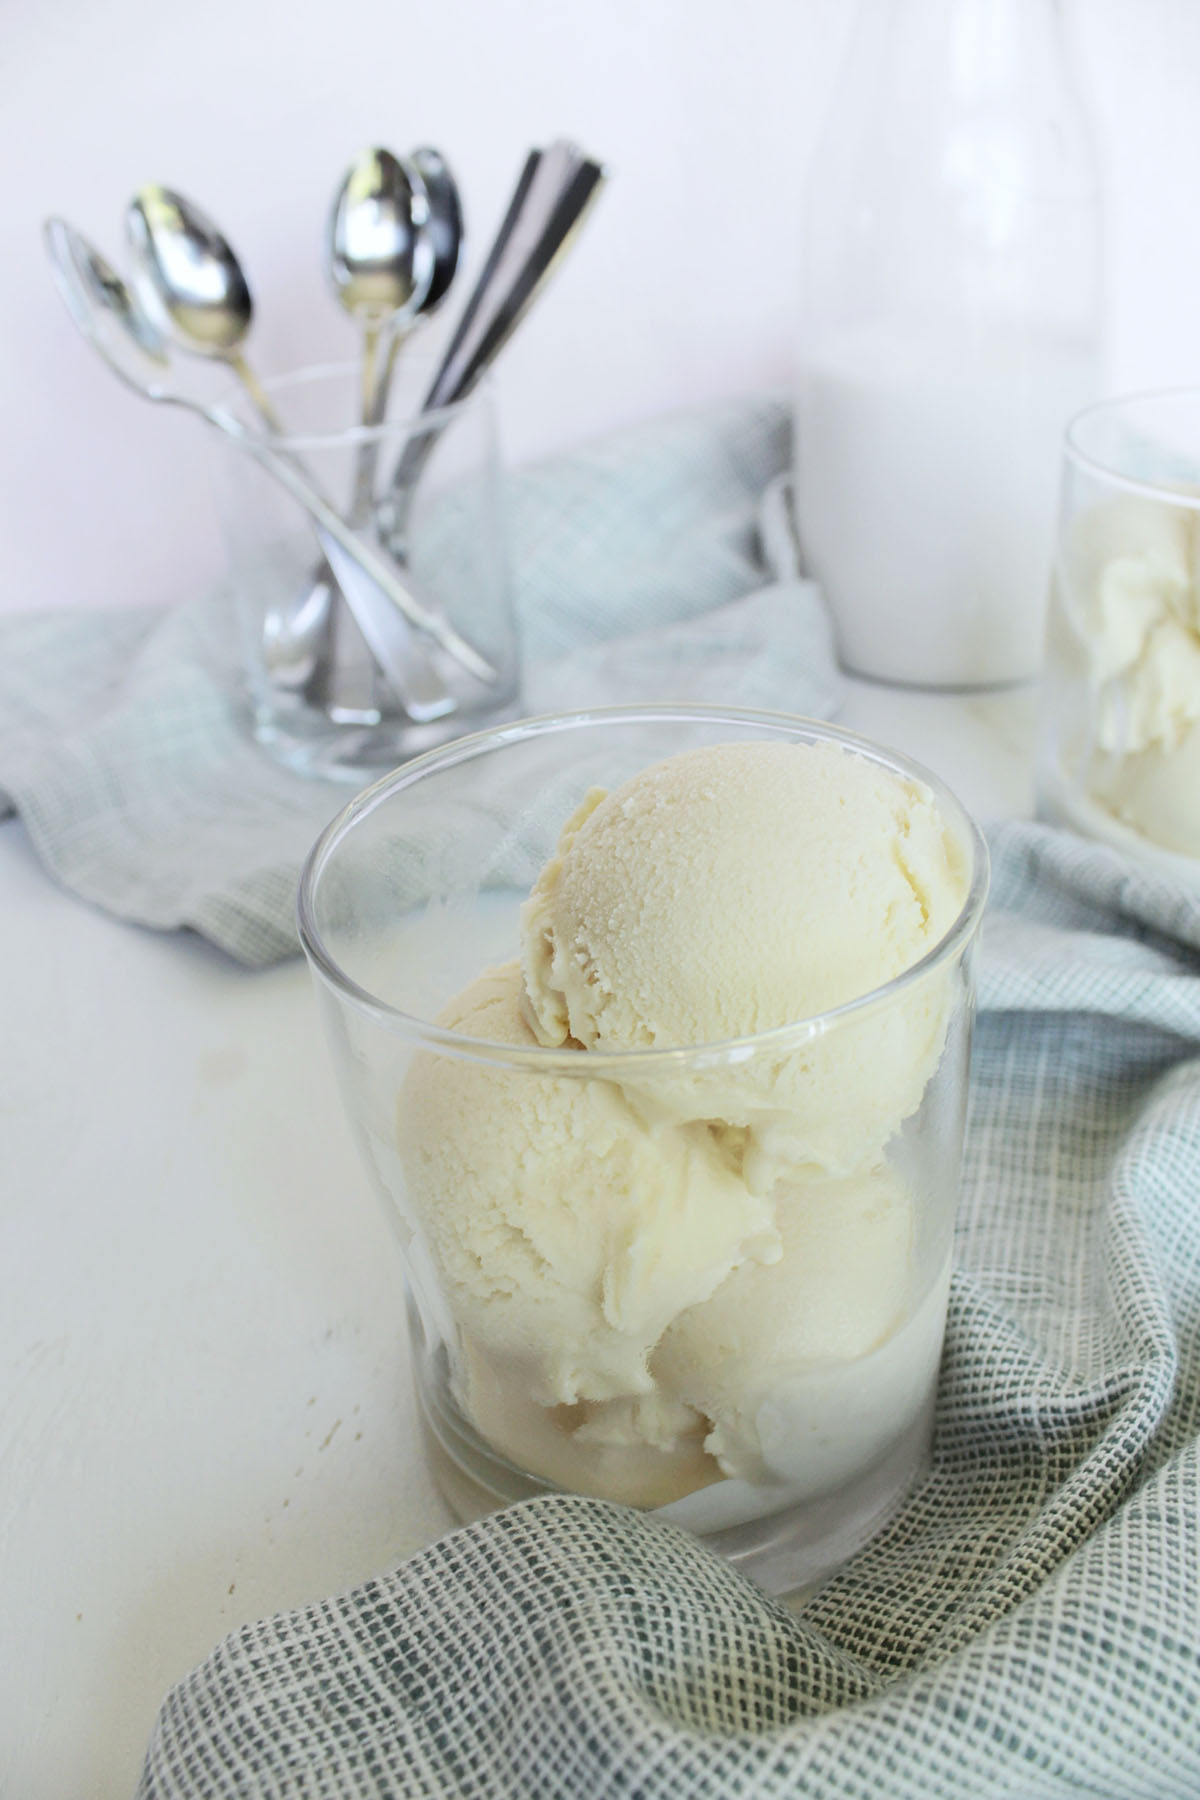 vanilla ice cream in a glass cup.